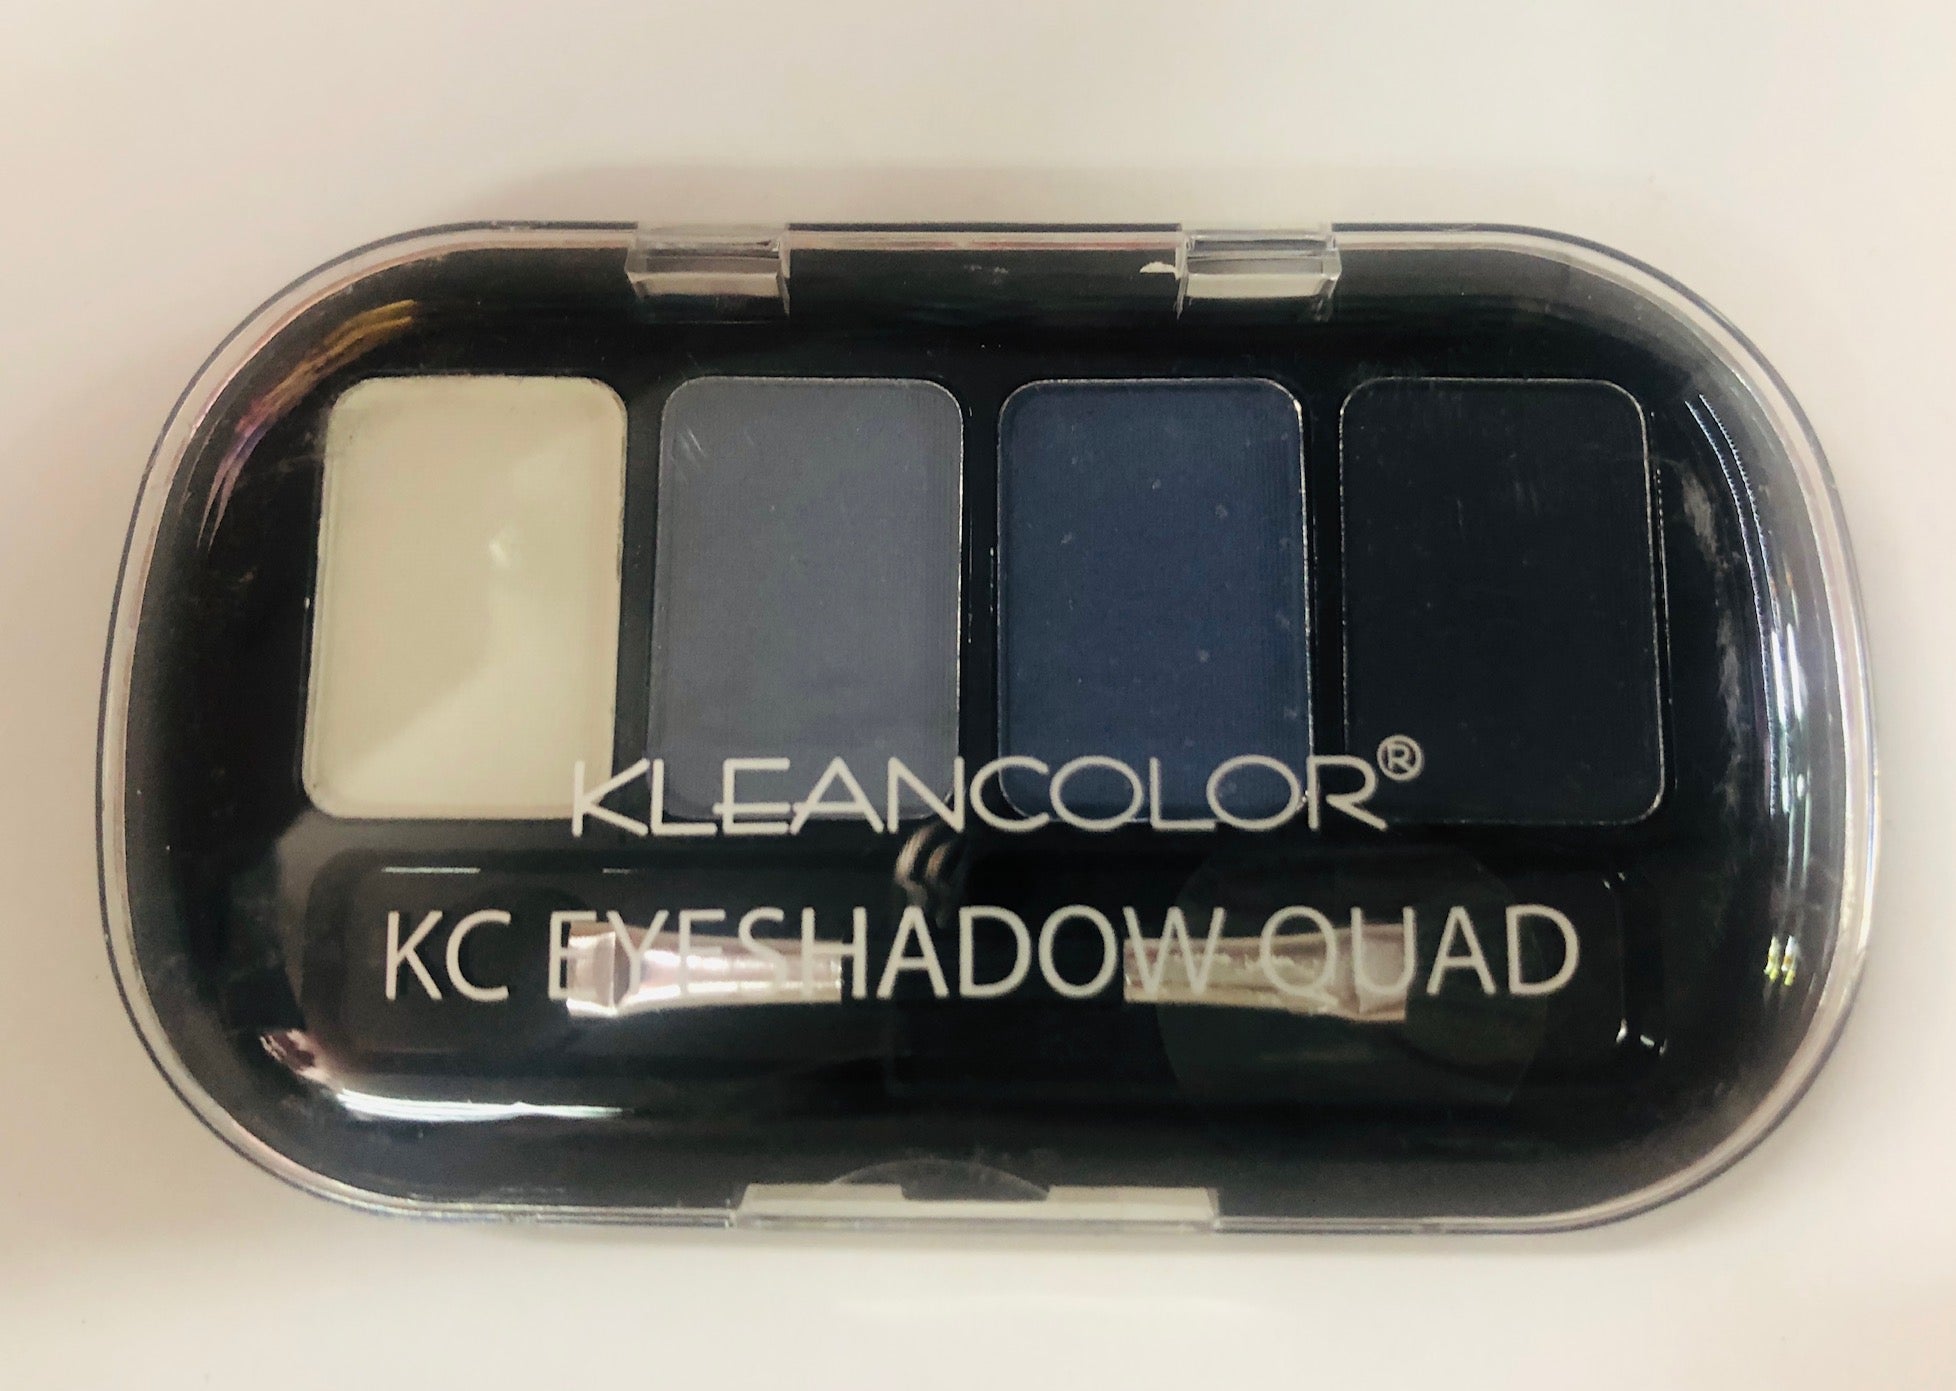 Sombras Kleancolor KC Eyeshadow Quad (4 tonos)